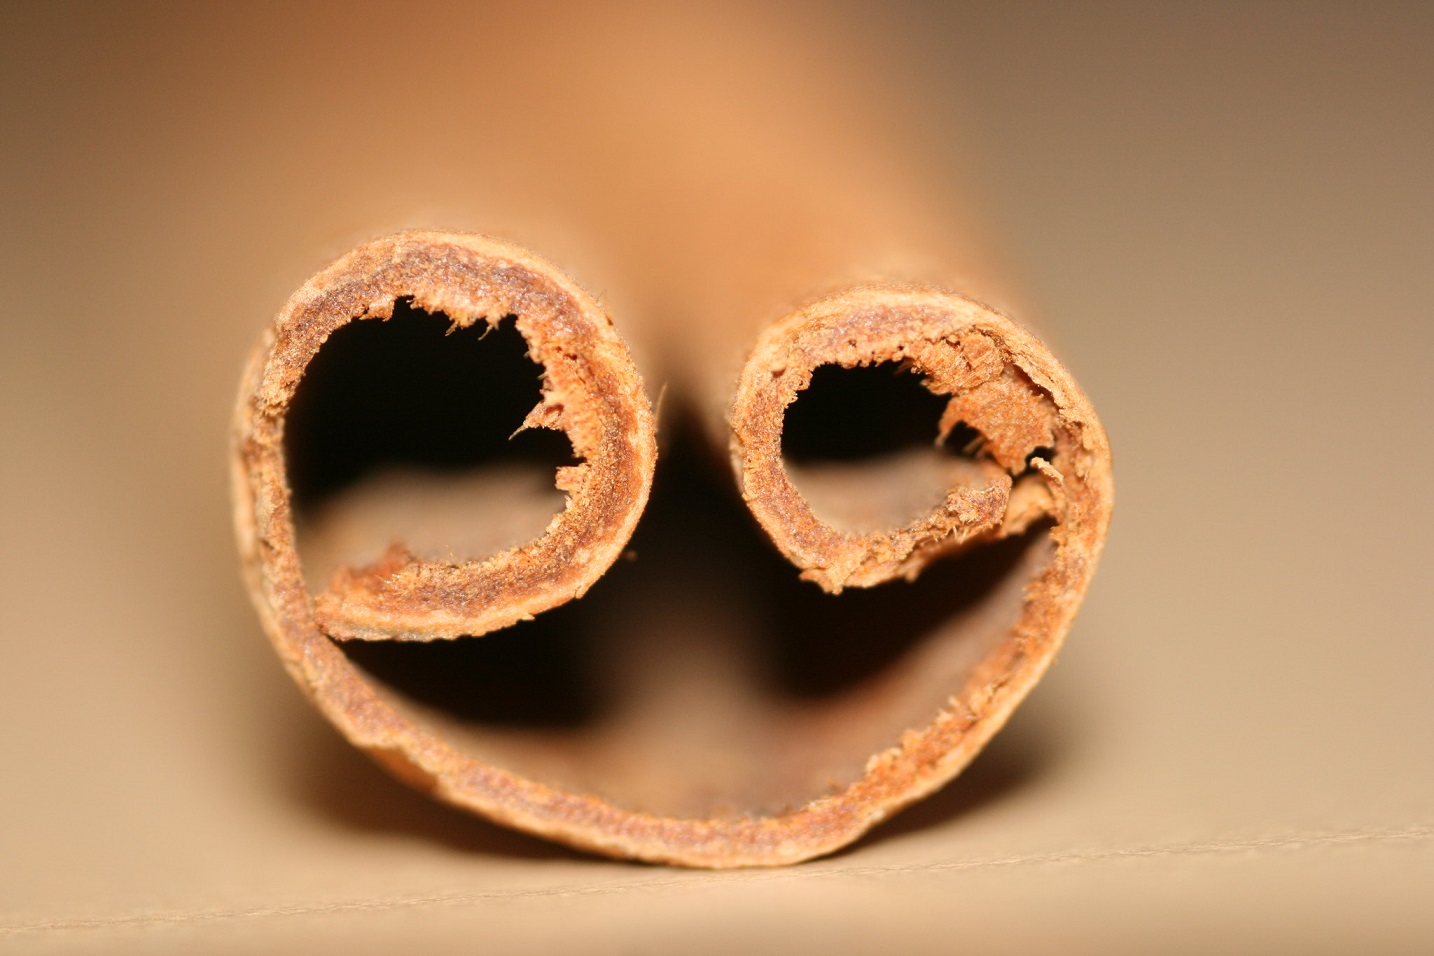 is cinnamon good or bad for gerd (acid reflux)